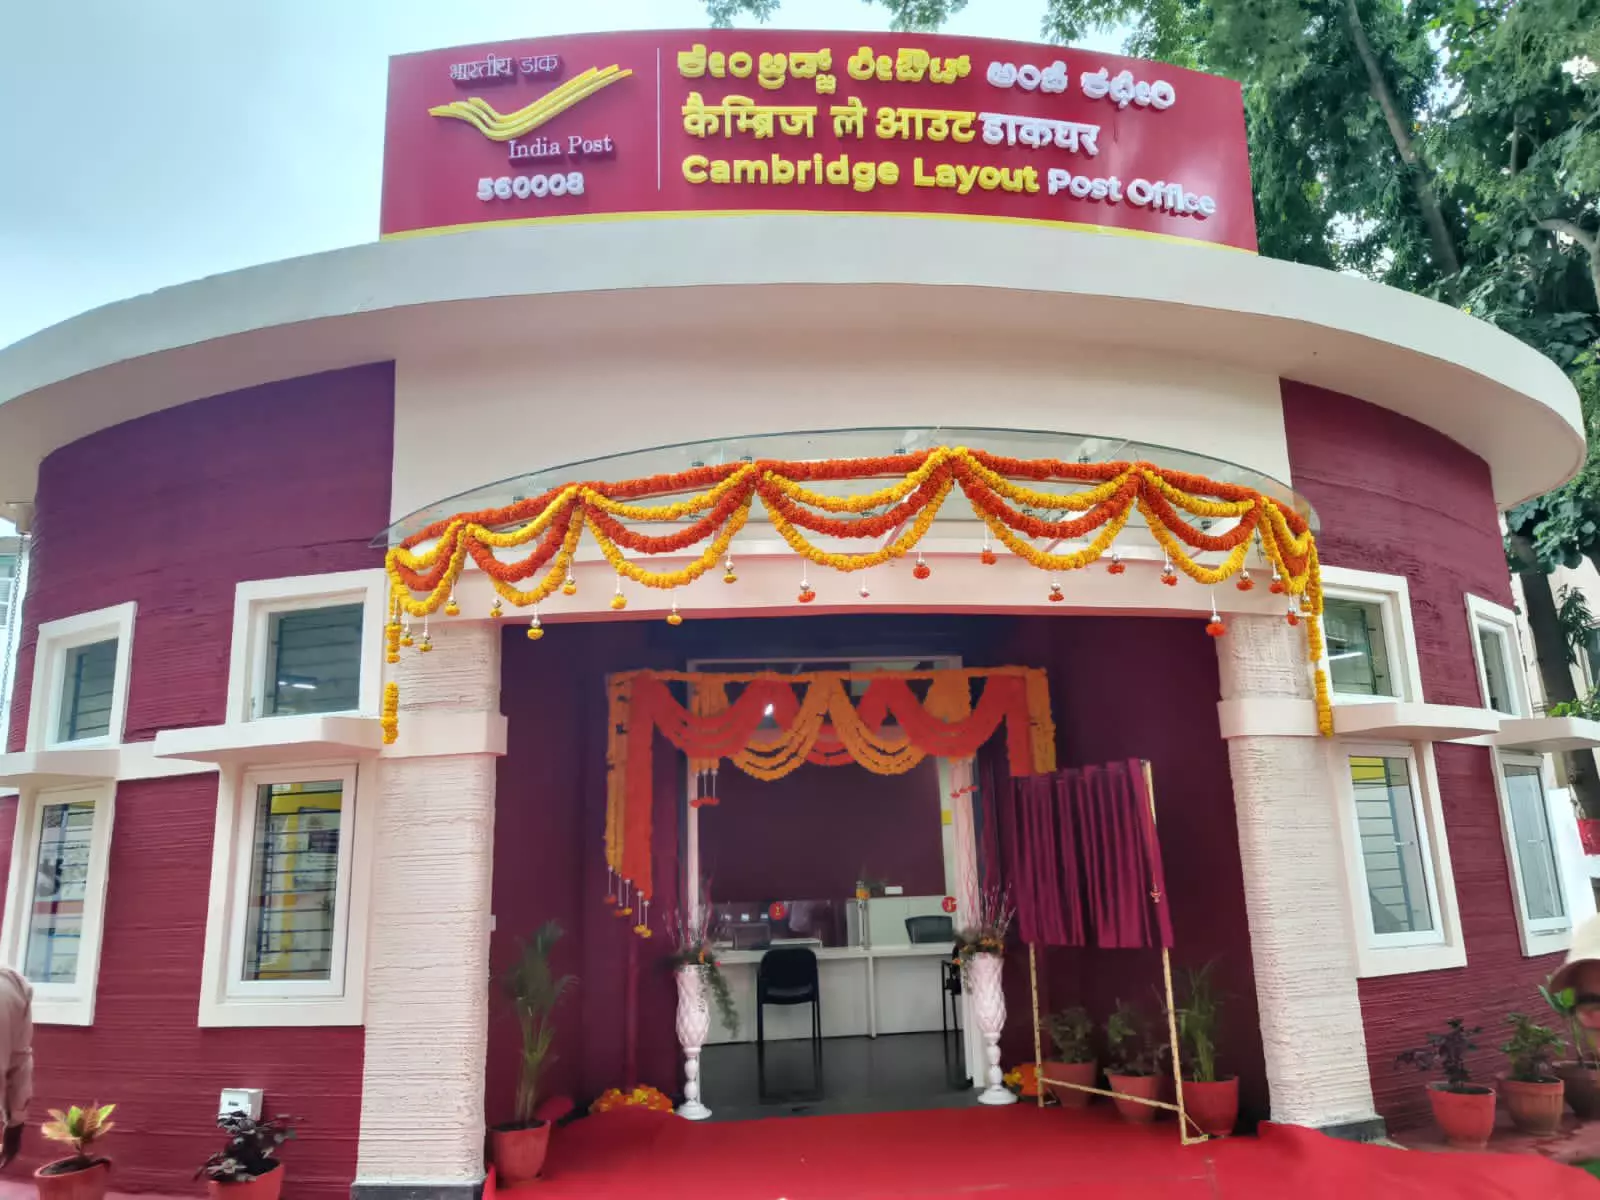 3D-printed post office building in Bengaluru